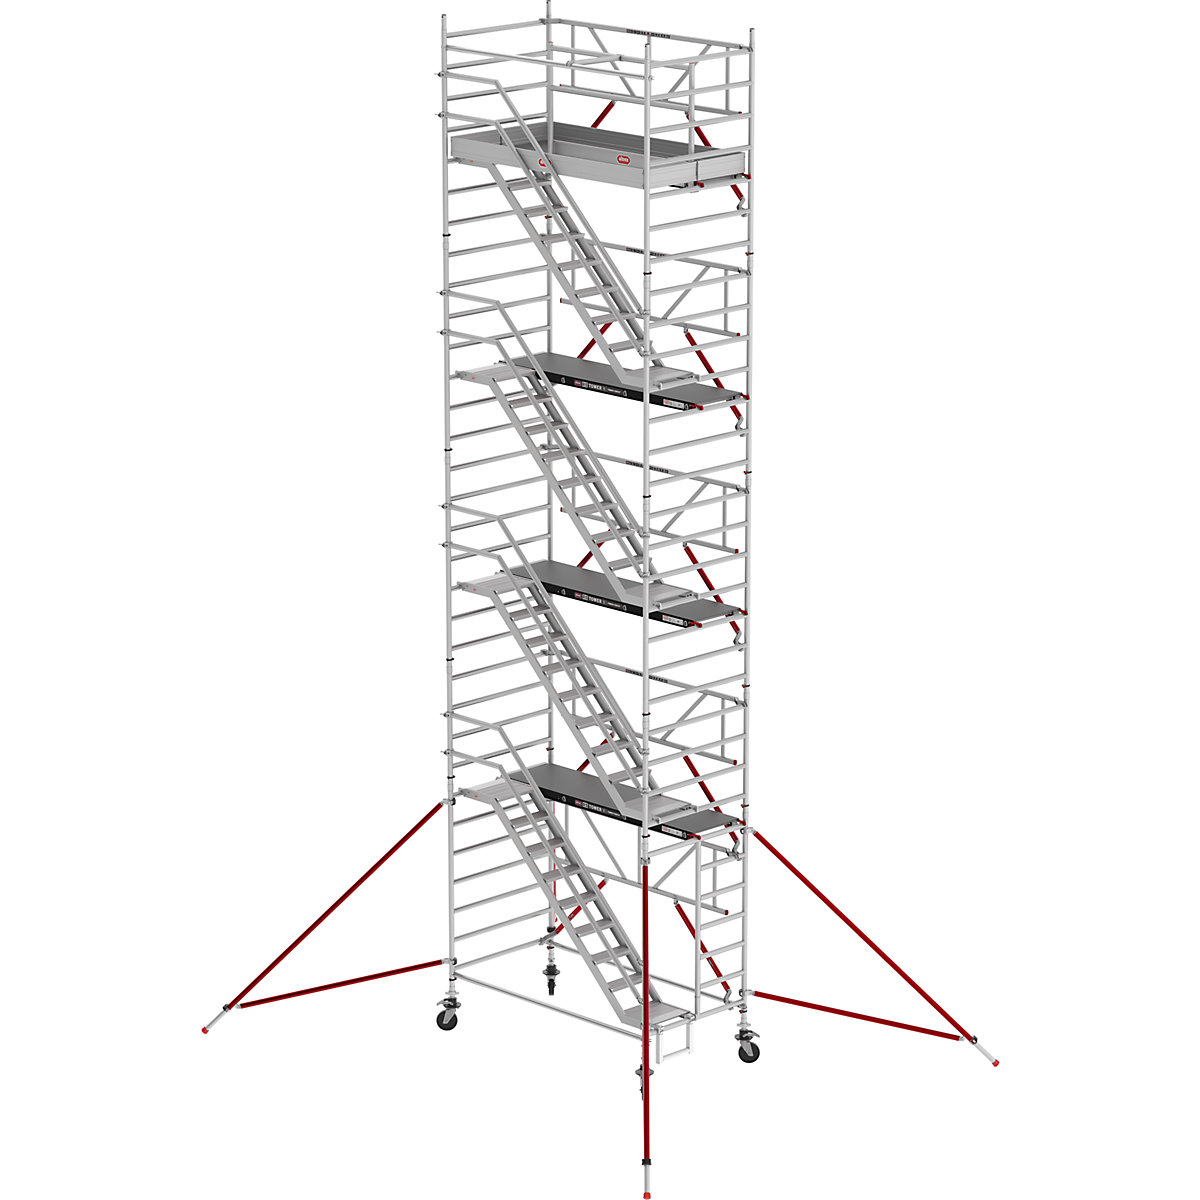 Oder s stopnicami RS TOWER 53, širok – Altrex, Fiber-Deck®, dolžina 2,45 m, delovna višina 10,20 m